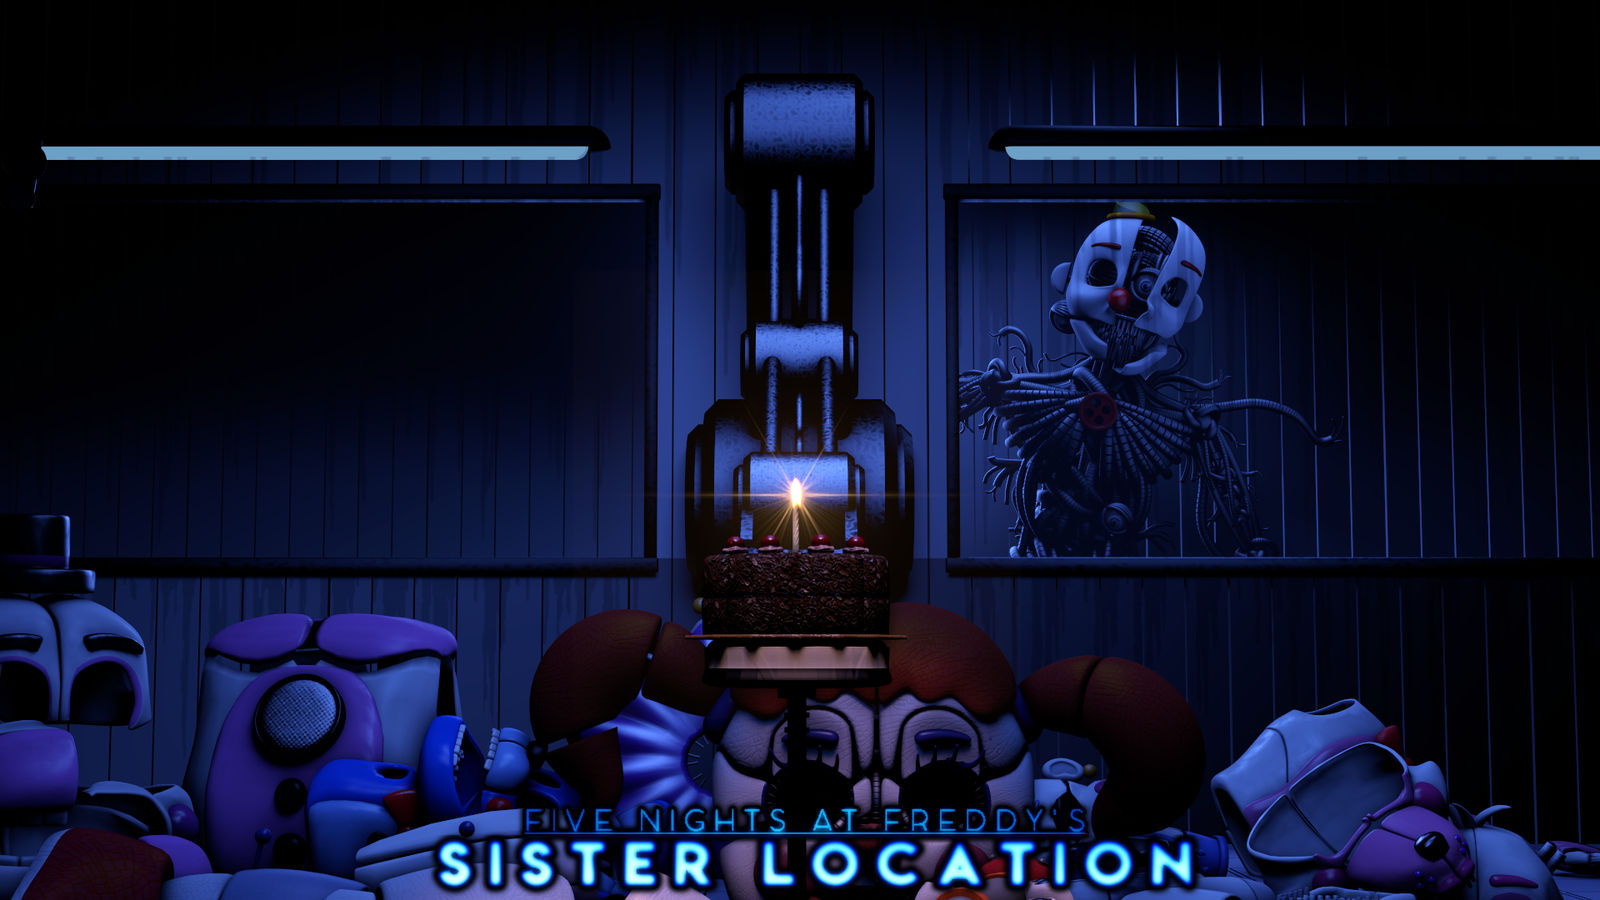 Sister Location night 4 ~[FNAF] by Mikeypuma134 on DeviantArt